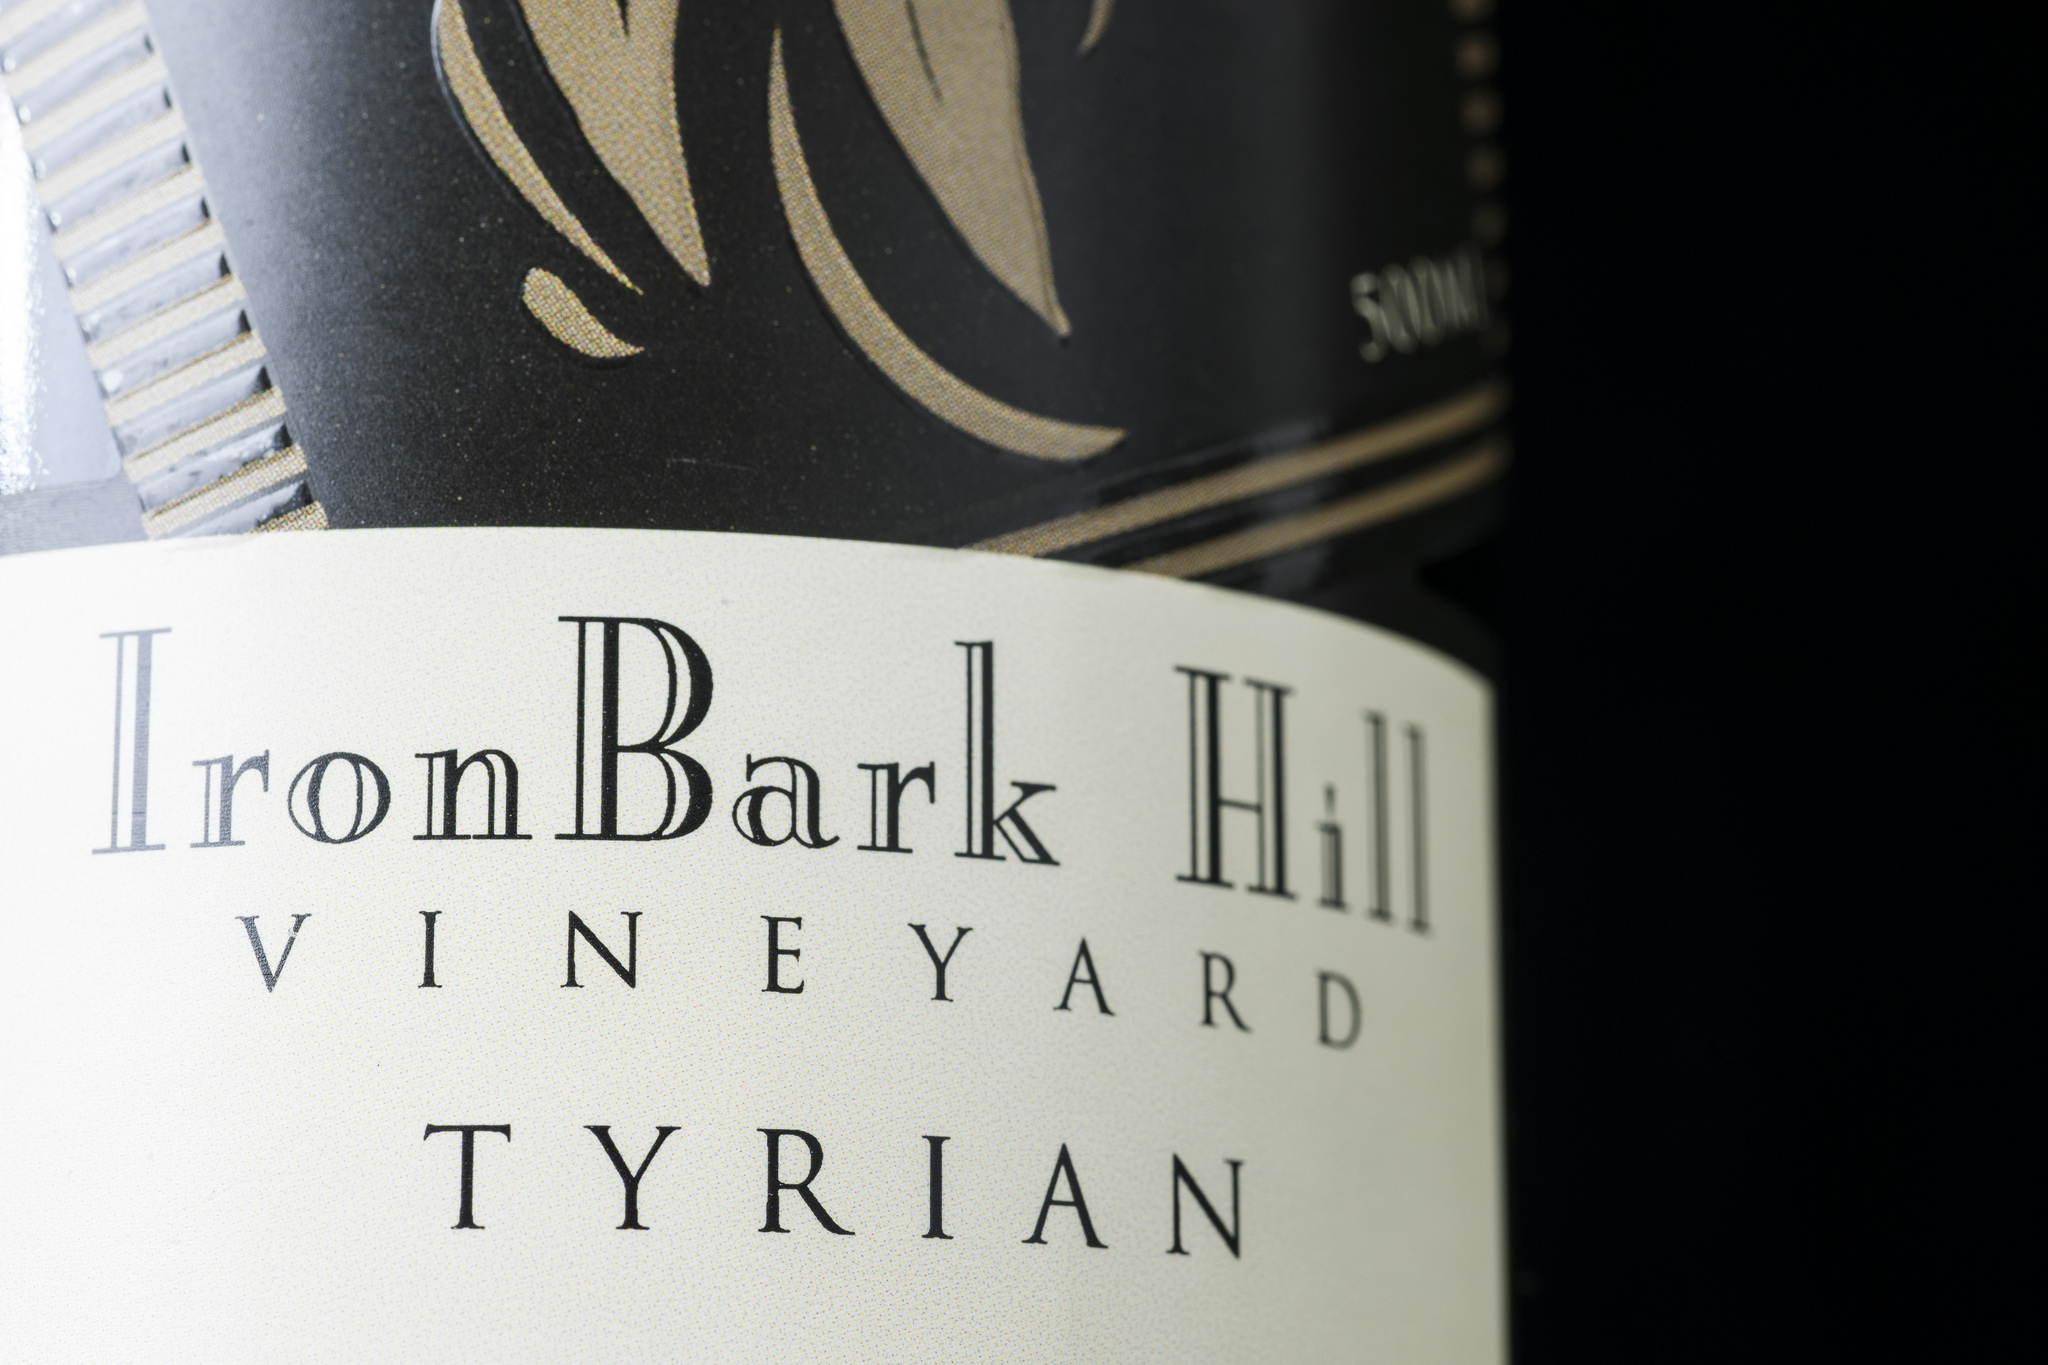 close shot of label on wine bottle - text reads: Ironbark Hill Vineyard, Tyrian